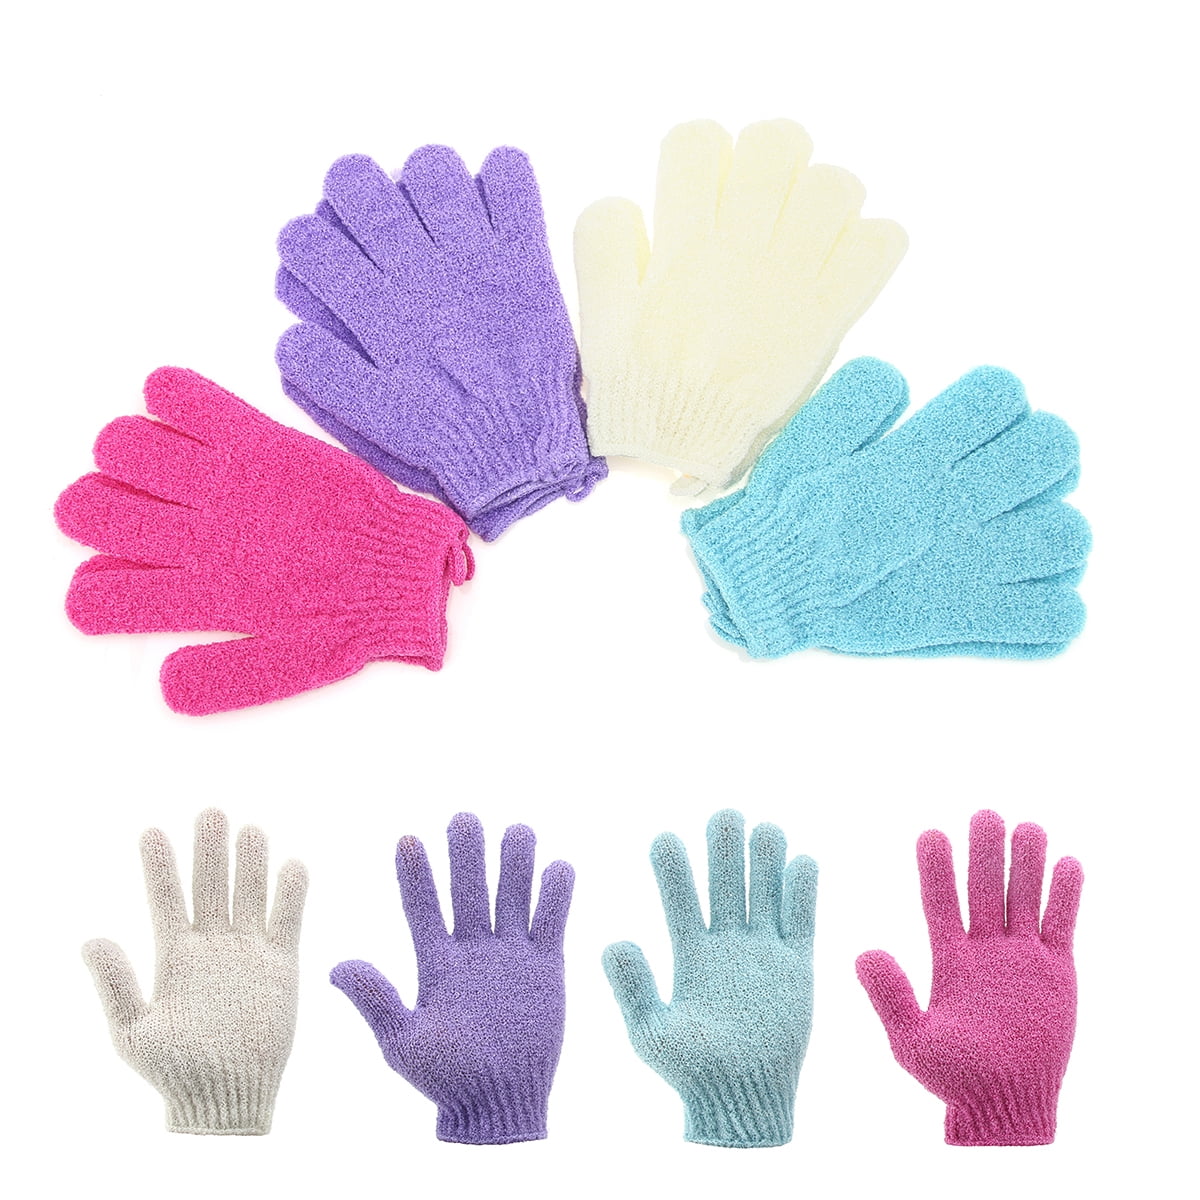 Nylon rubbing gloves, five-finger bath gloves, strong decontamination ...